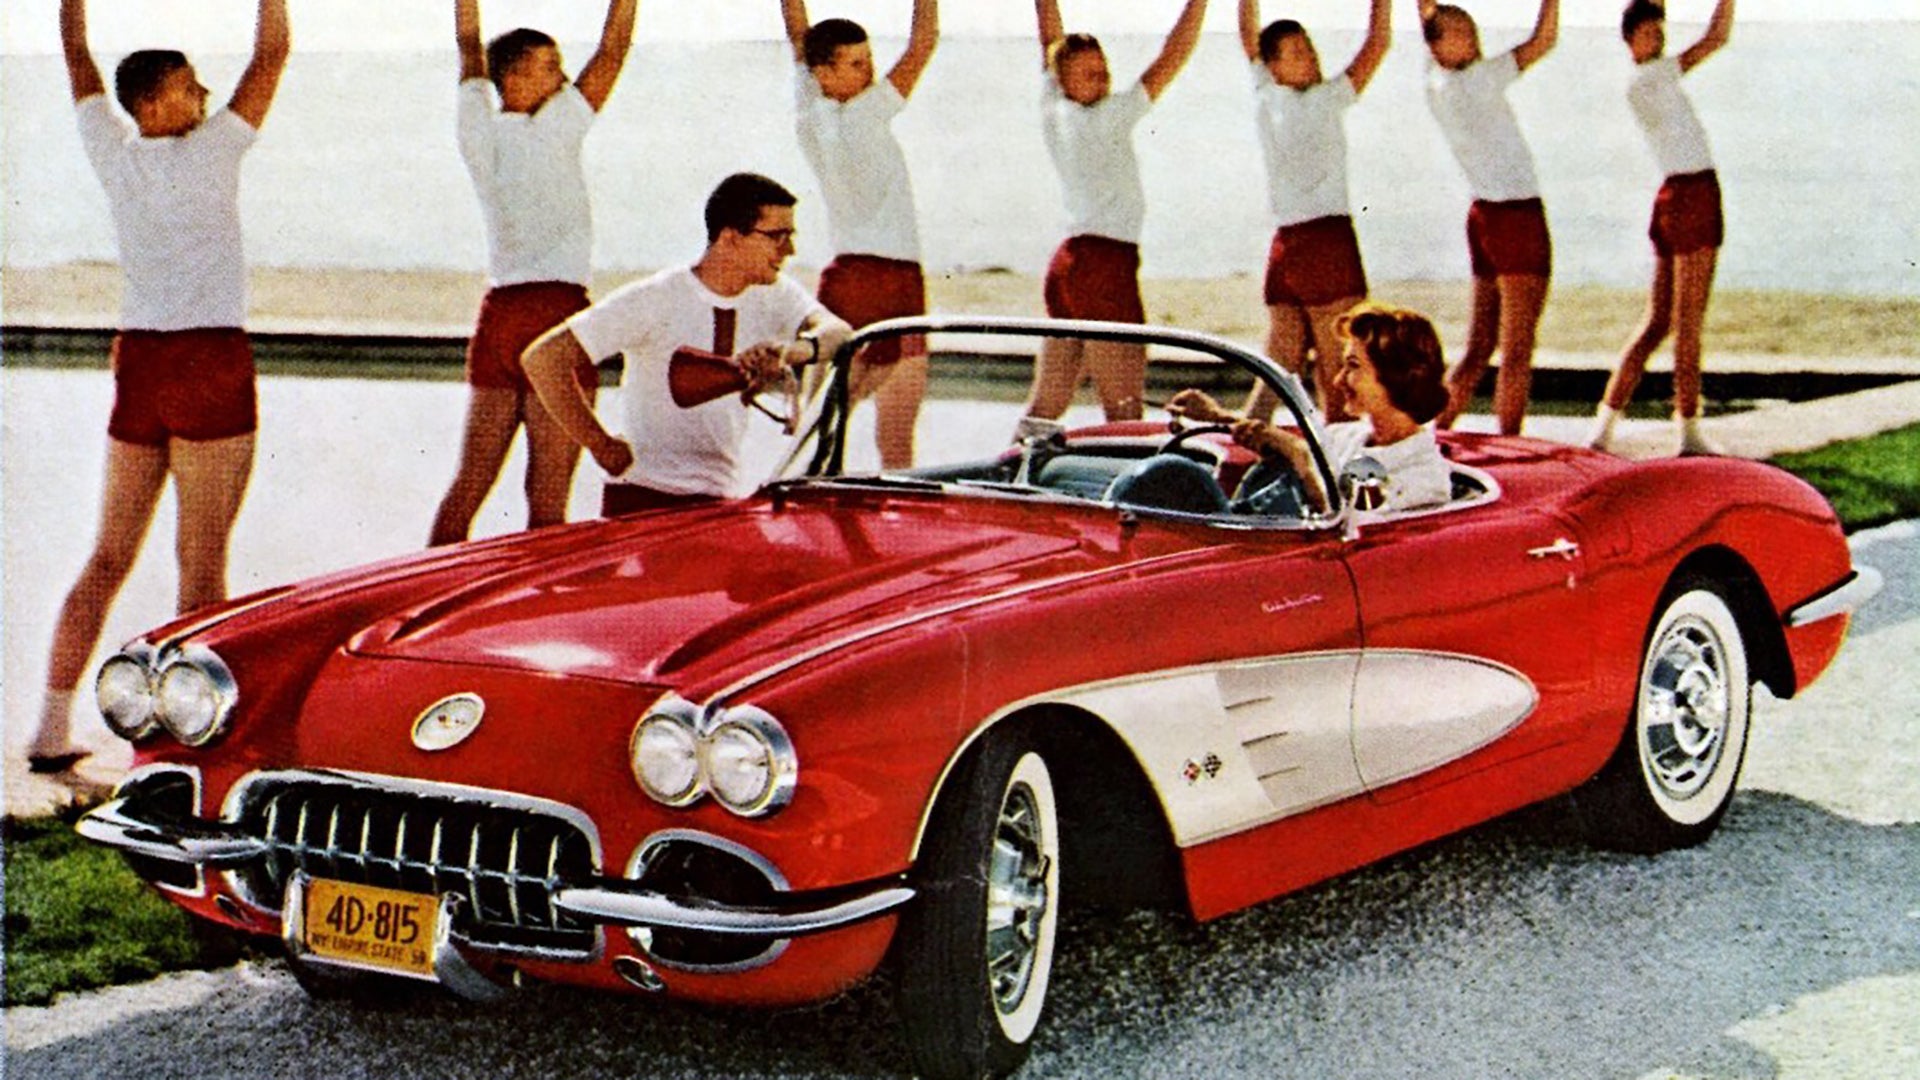 AMERICA'S ONLY SPORTS CAR ORIGINAL CHEVY GM VETTE AD 1959 CHEVROLET CORVETTE 